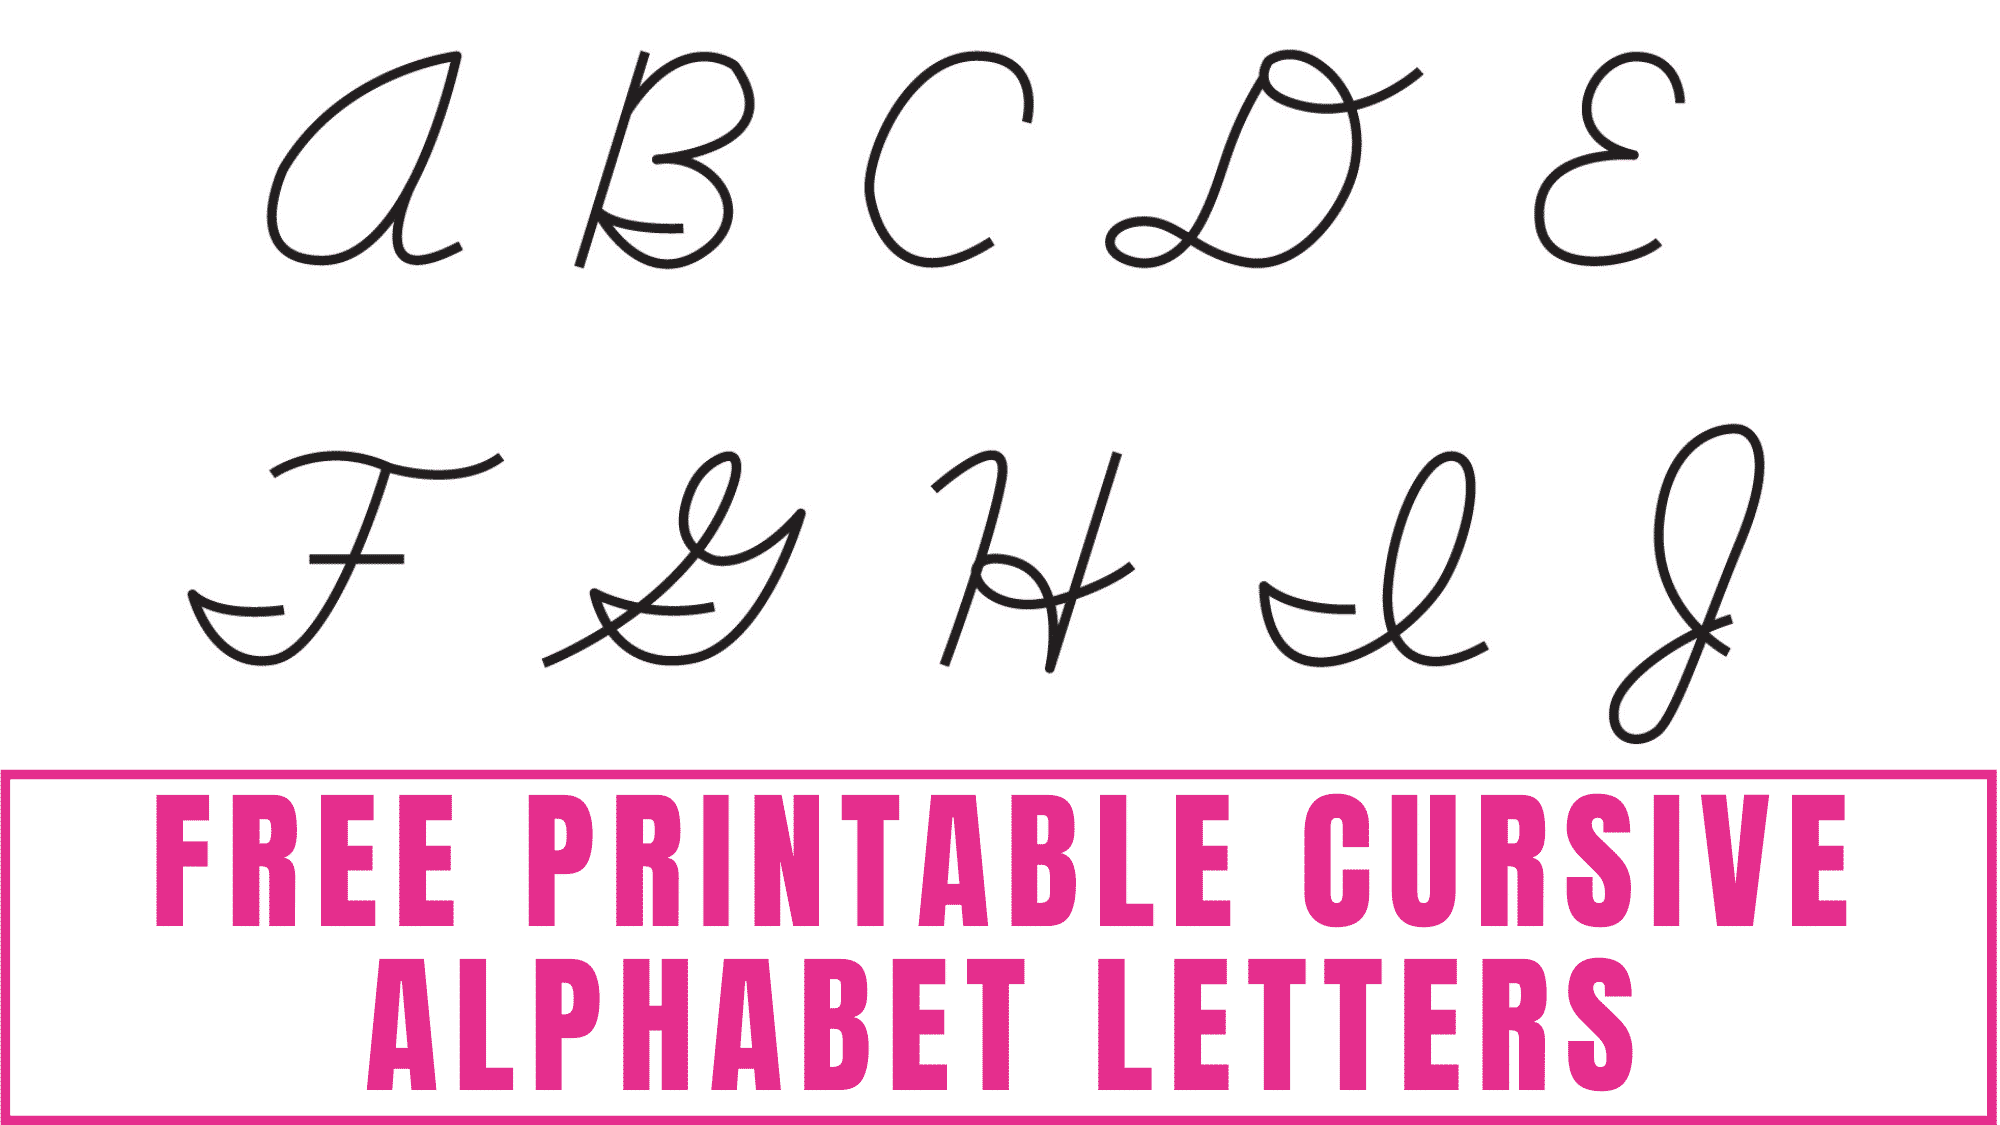 Printable Alphabet In Cursive